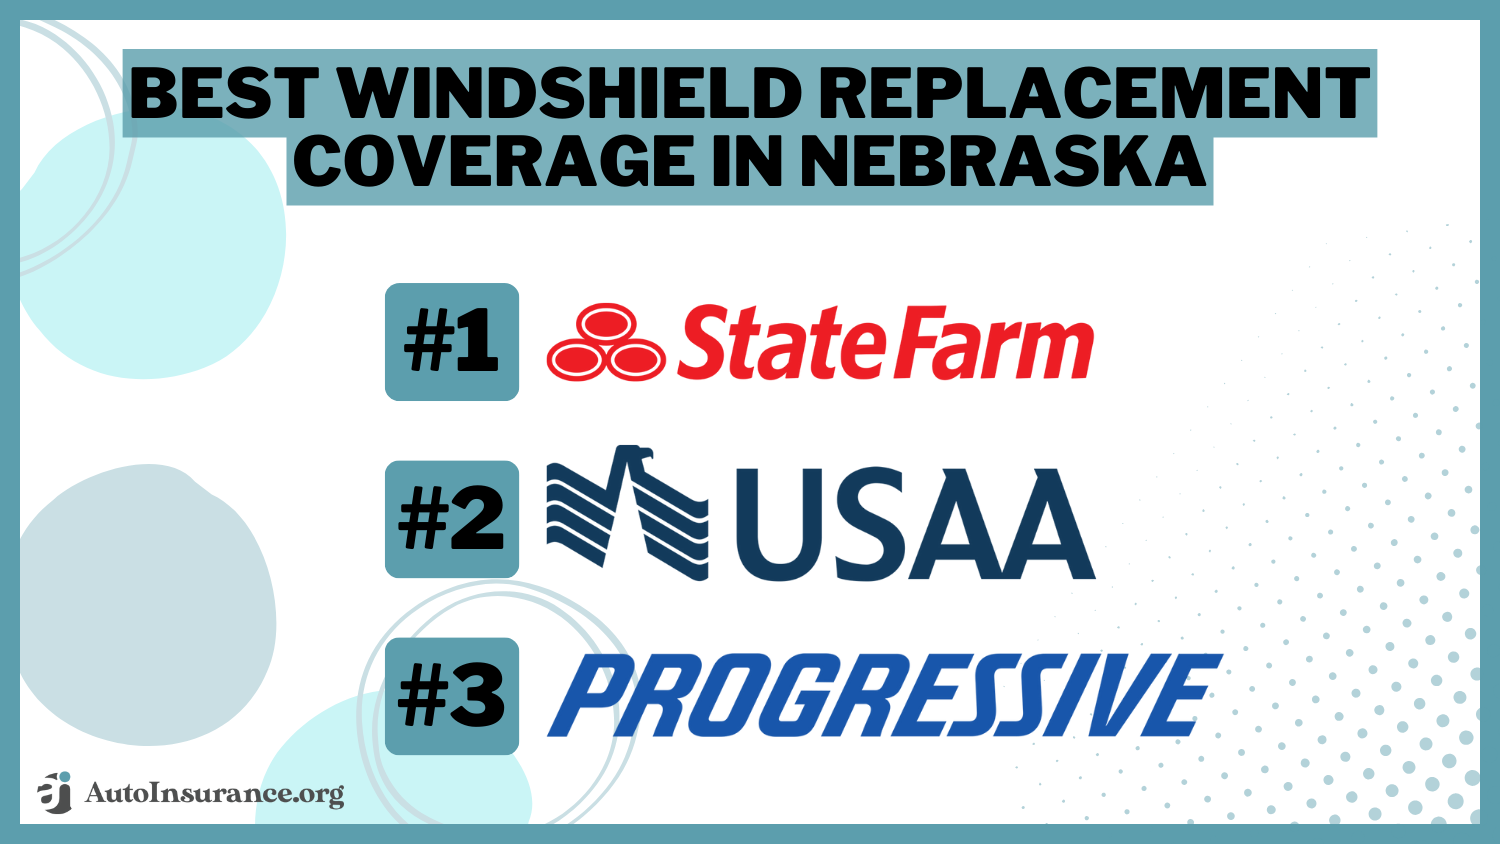 Best Windshield Replacement Coverage in Nebraska: State Farm, USAA, and Progressive